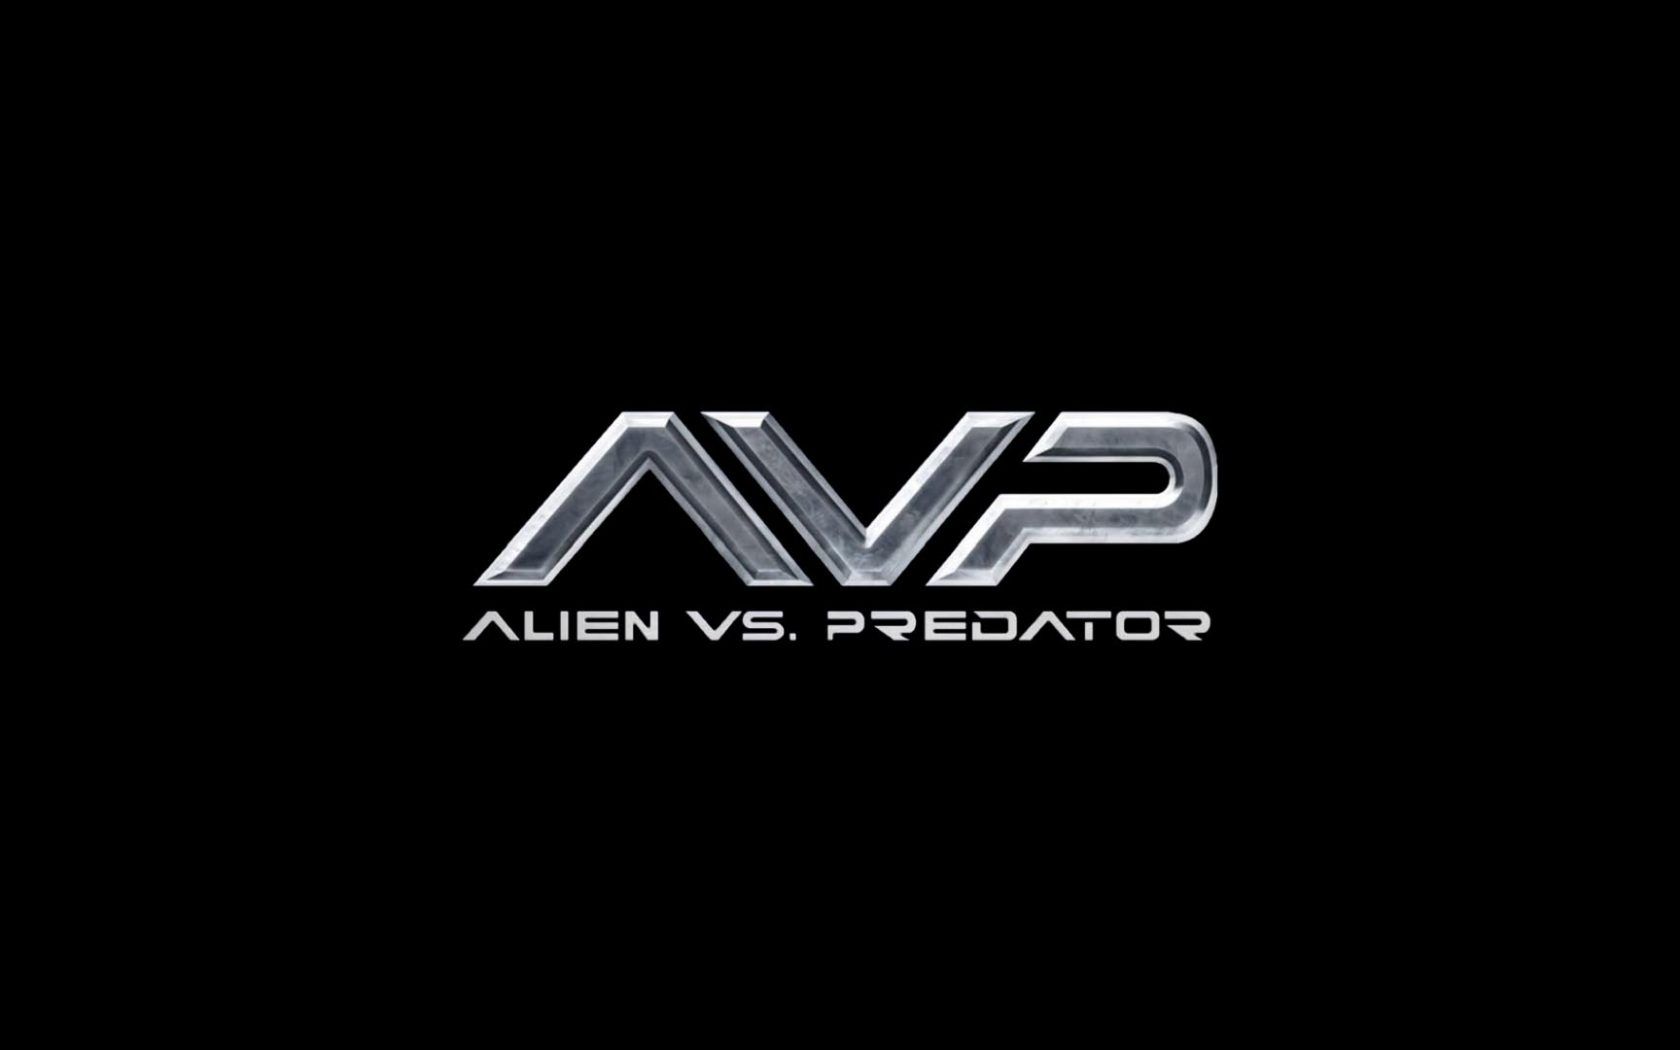 AVP: Alien vs. Predator Logo HD Wallpaper